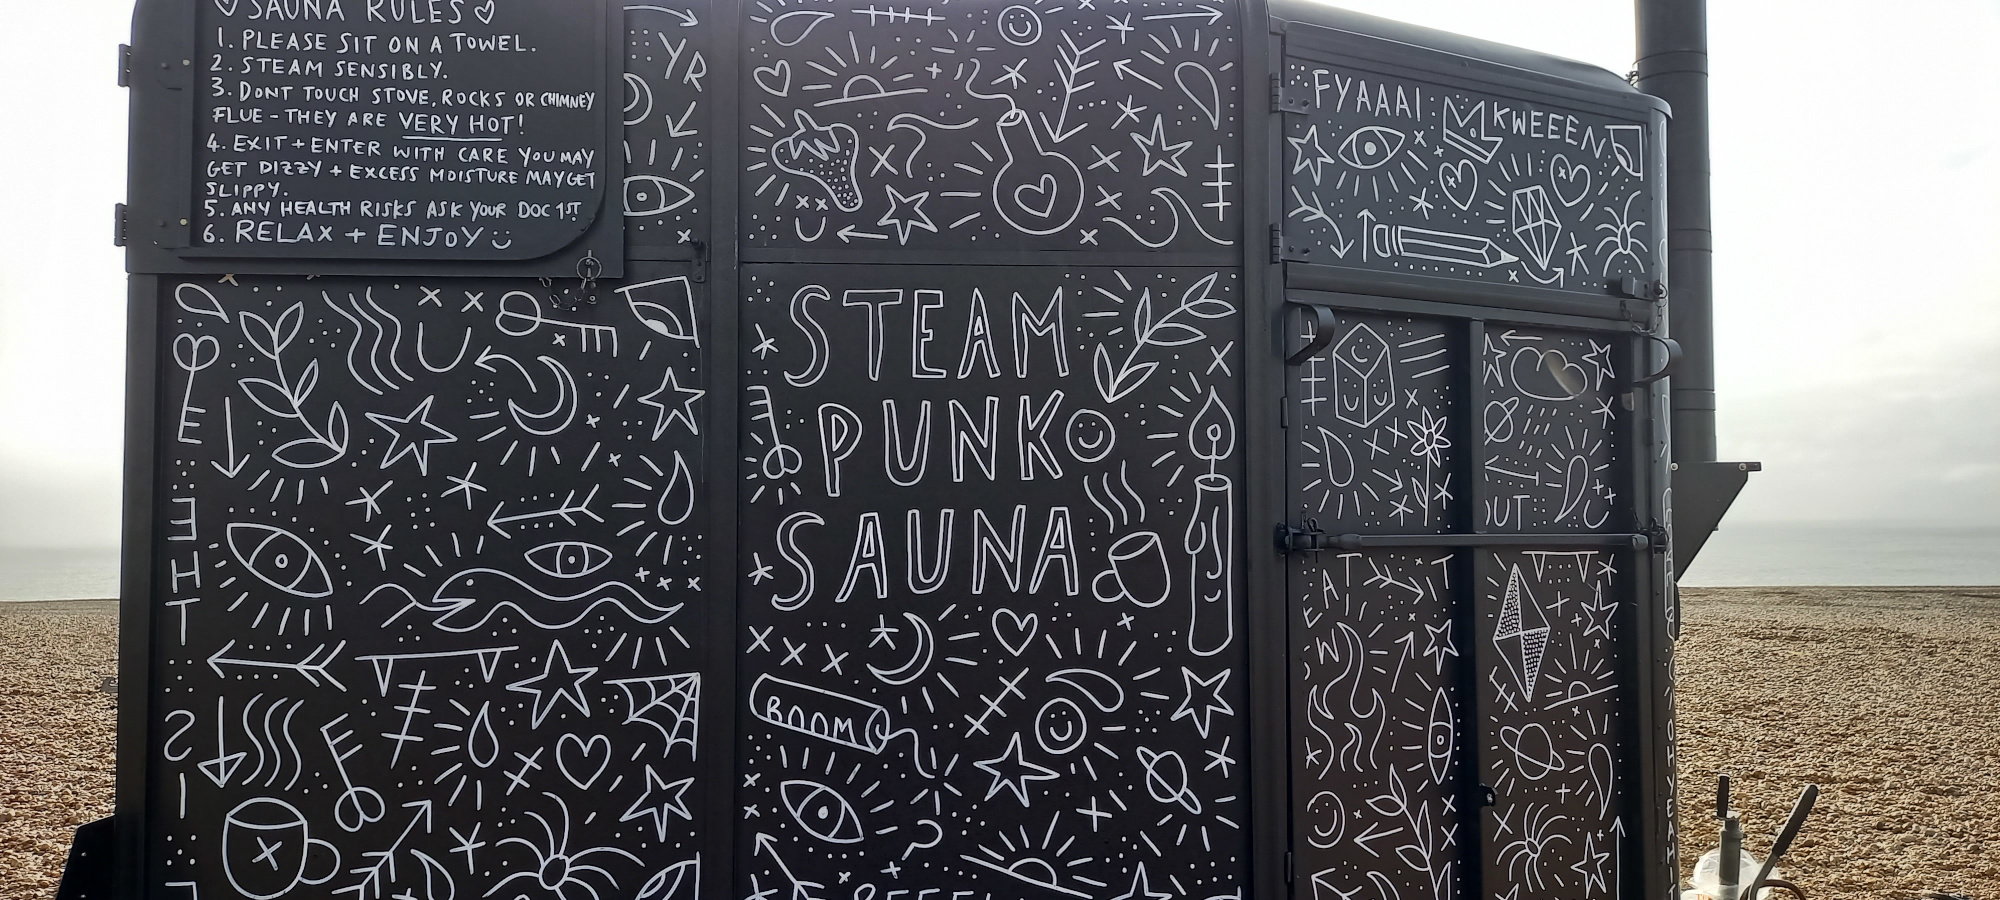 Steam Punk Sauna